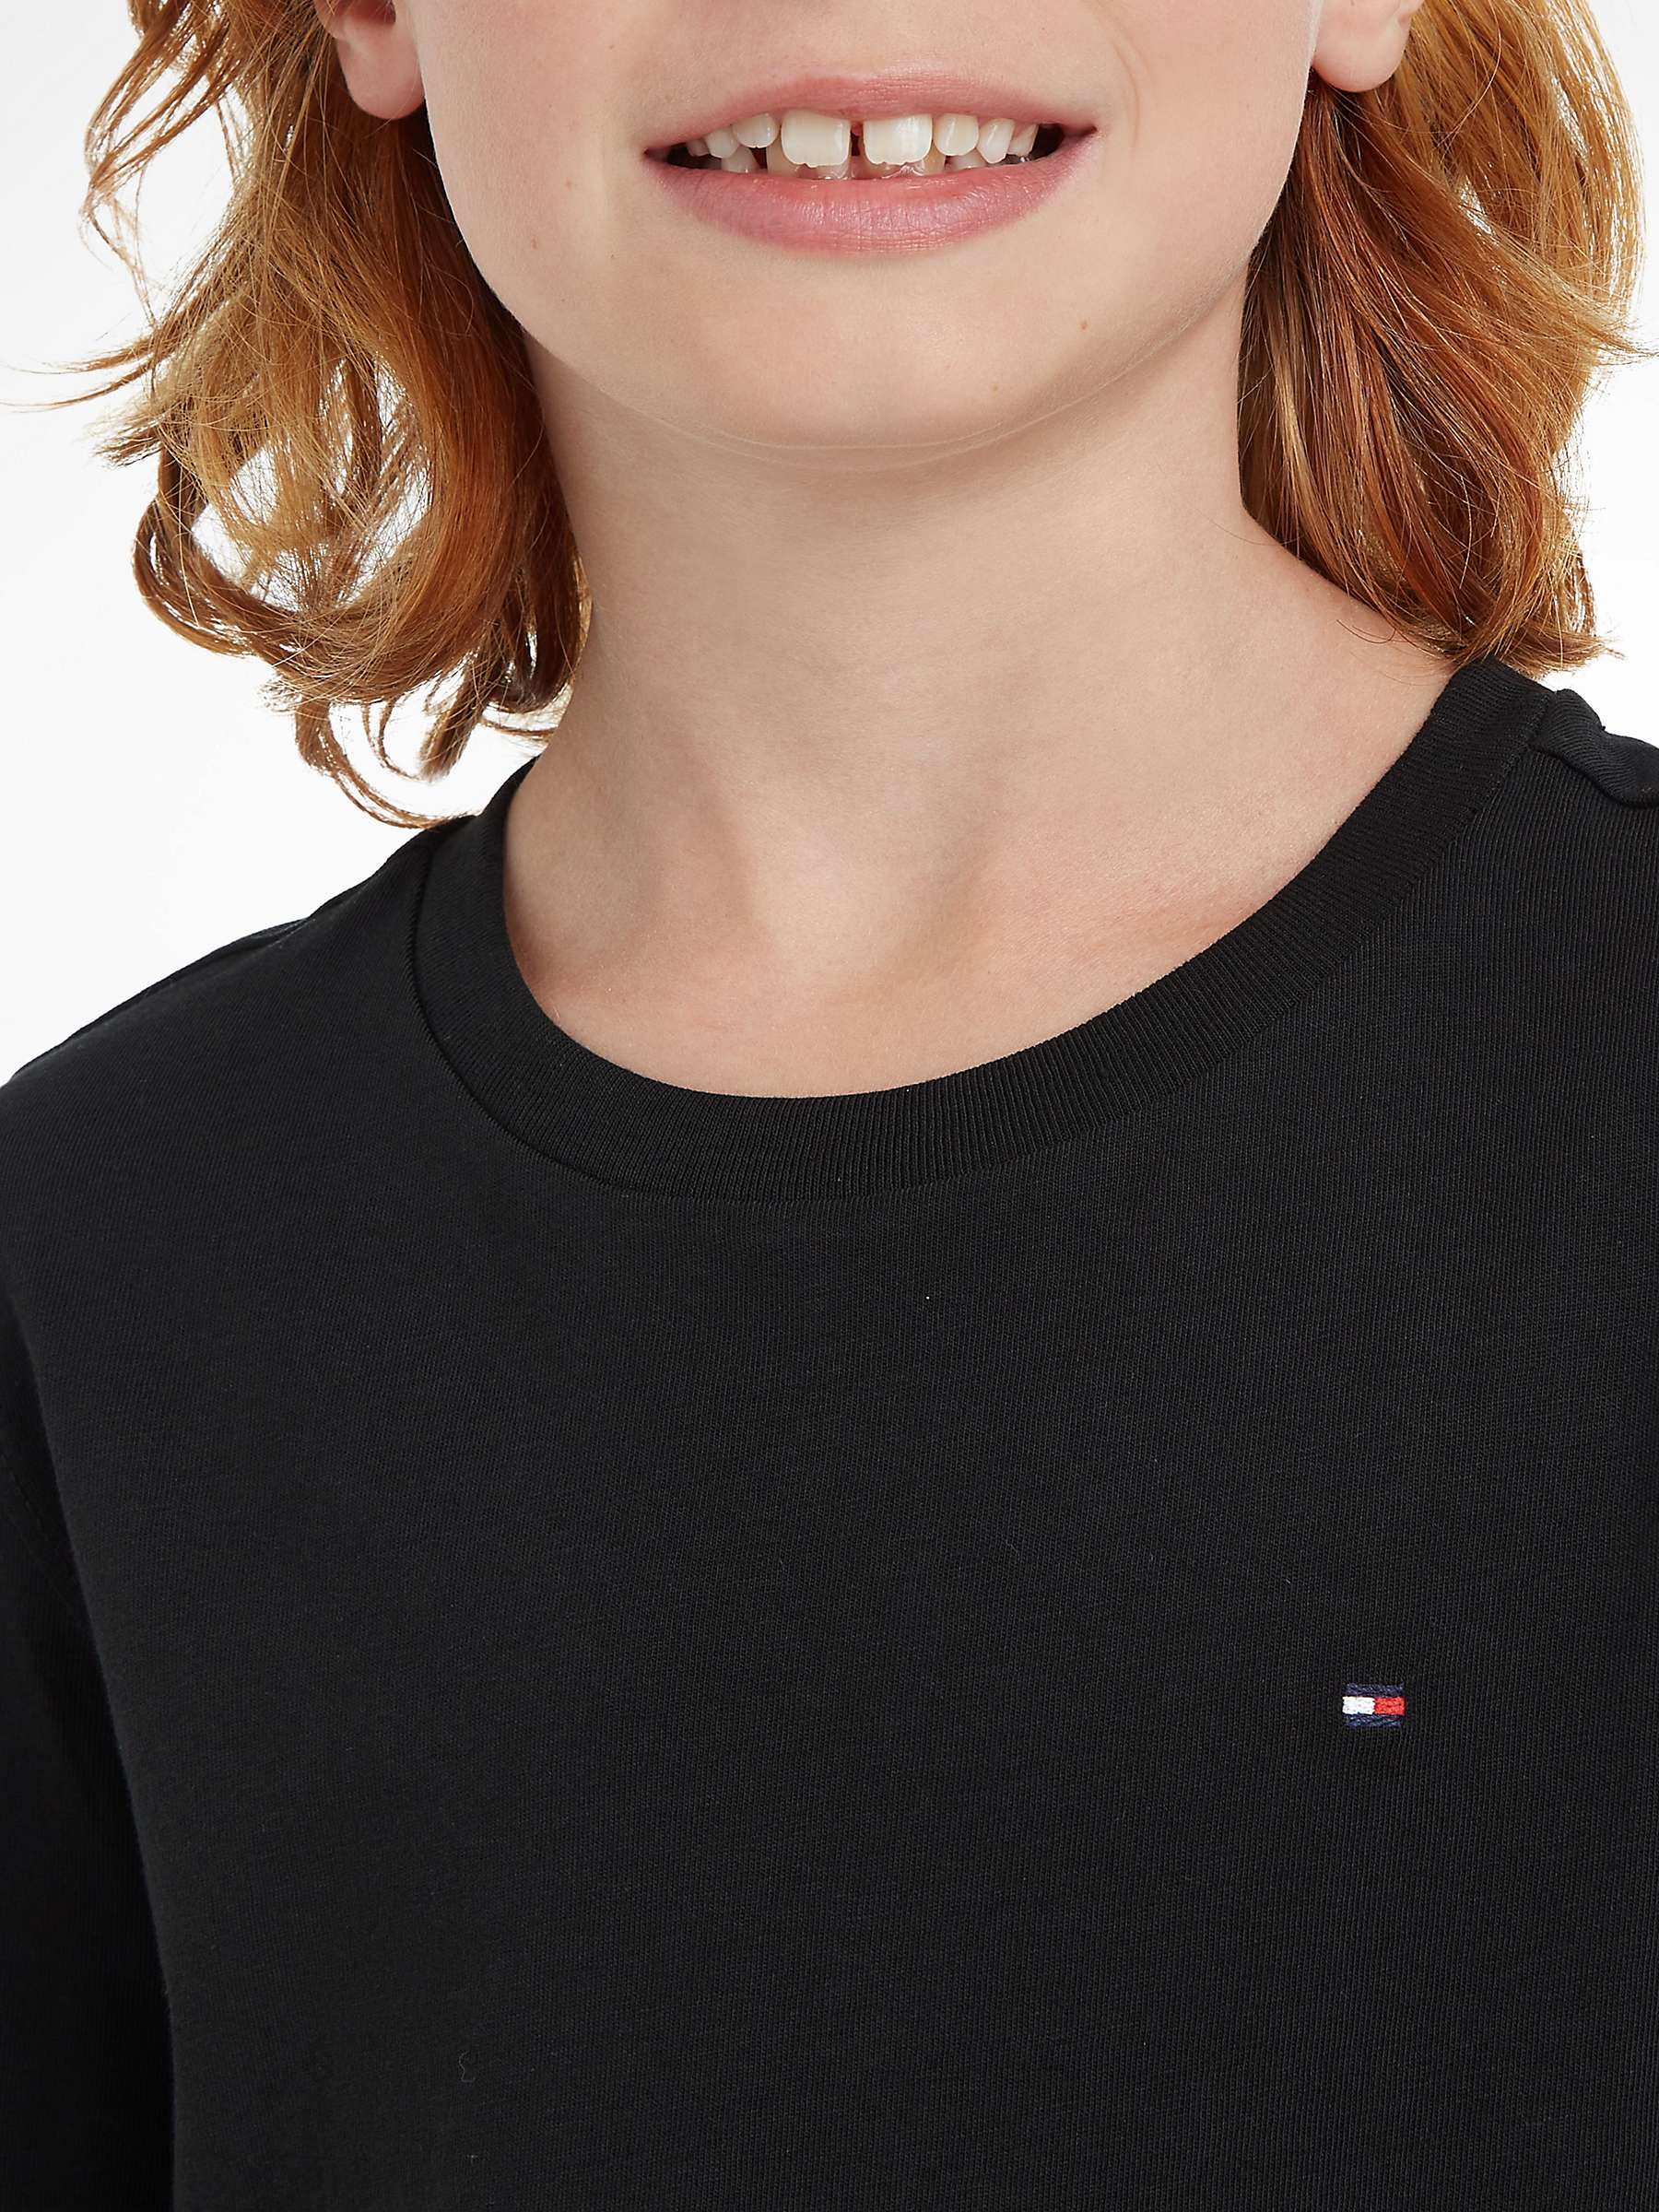 Buy Tommy Hilfiger Kids' Basic Crew Neck Long Sleeve Top Online at johnlewis.com